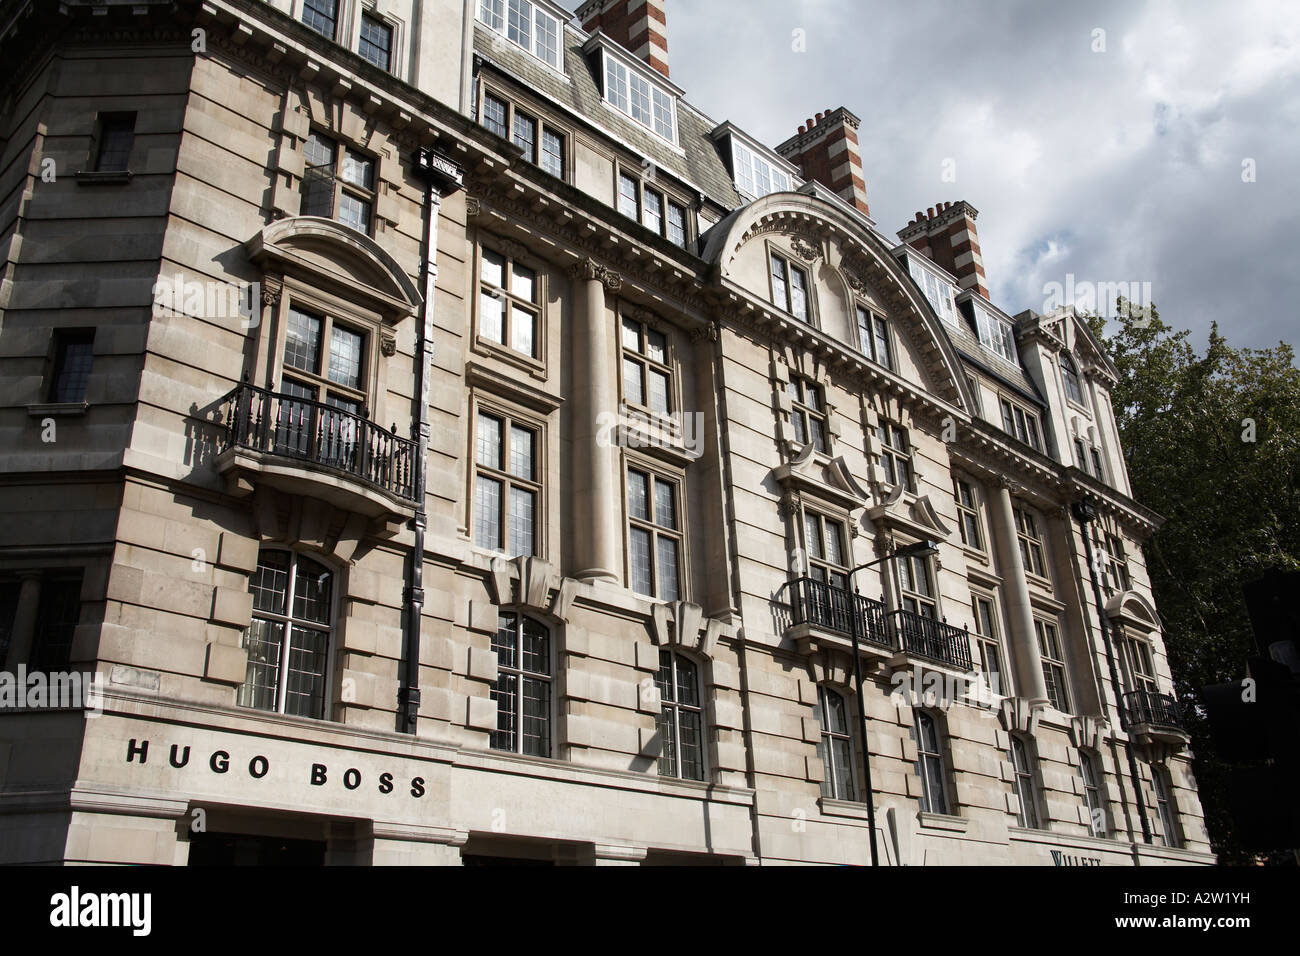 Decorative building with Hugo Boss logo on Sloane Square in Belgravia London  SW1 England Stock Photo - Alamy